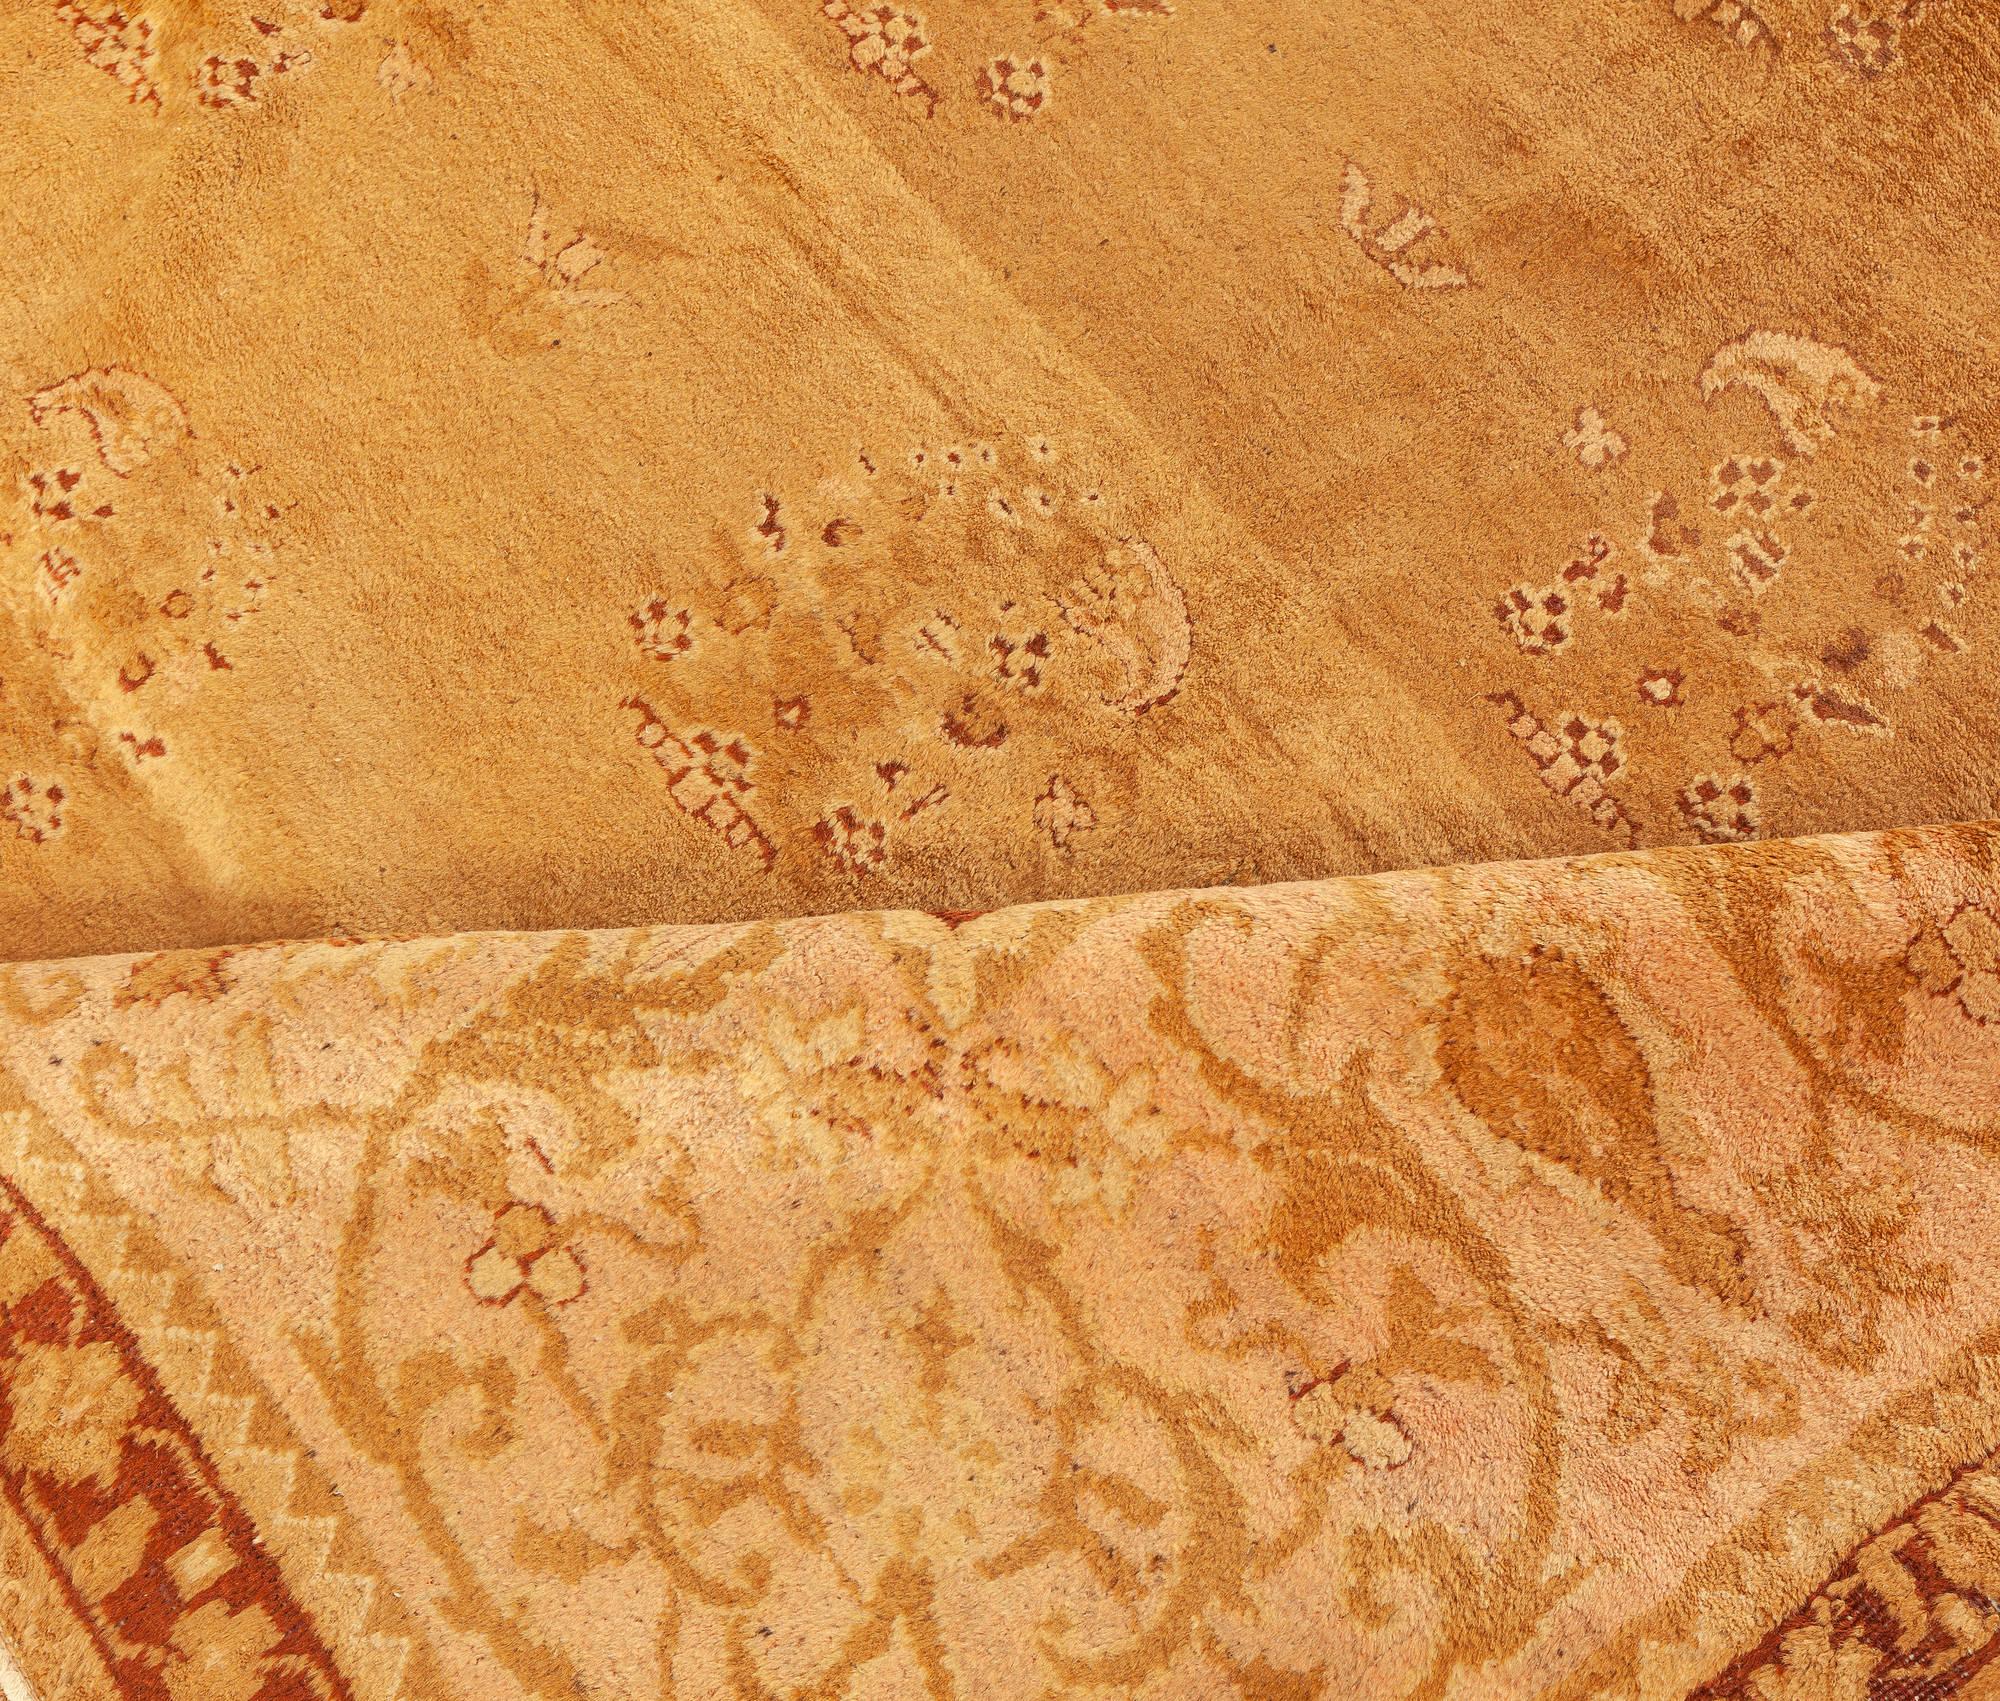 Antique Indian Amritsar handmade wool rug.
Size: 9'9